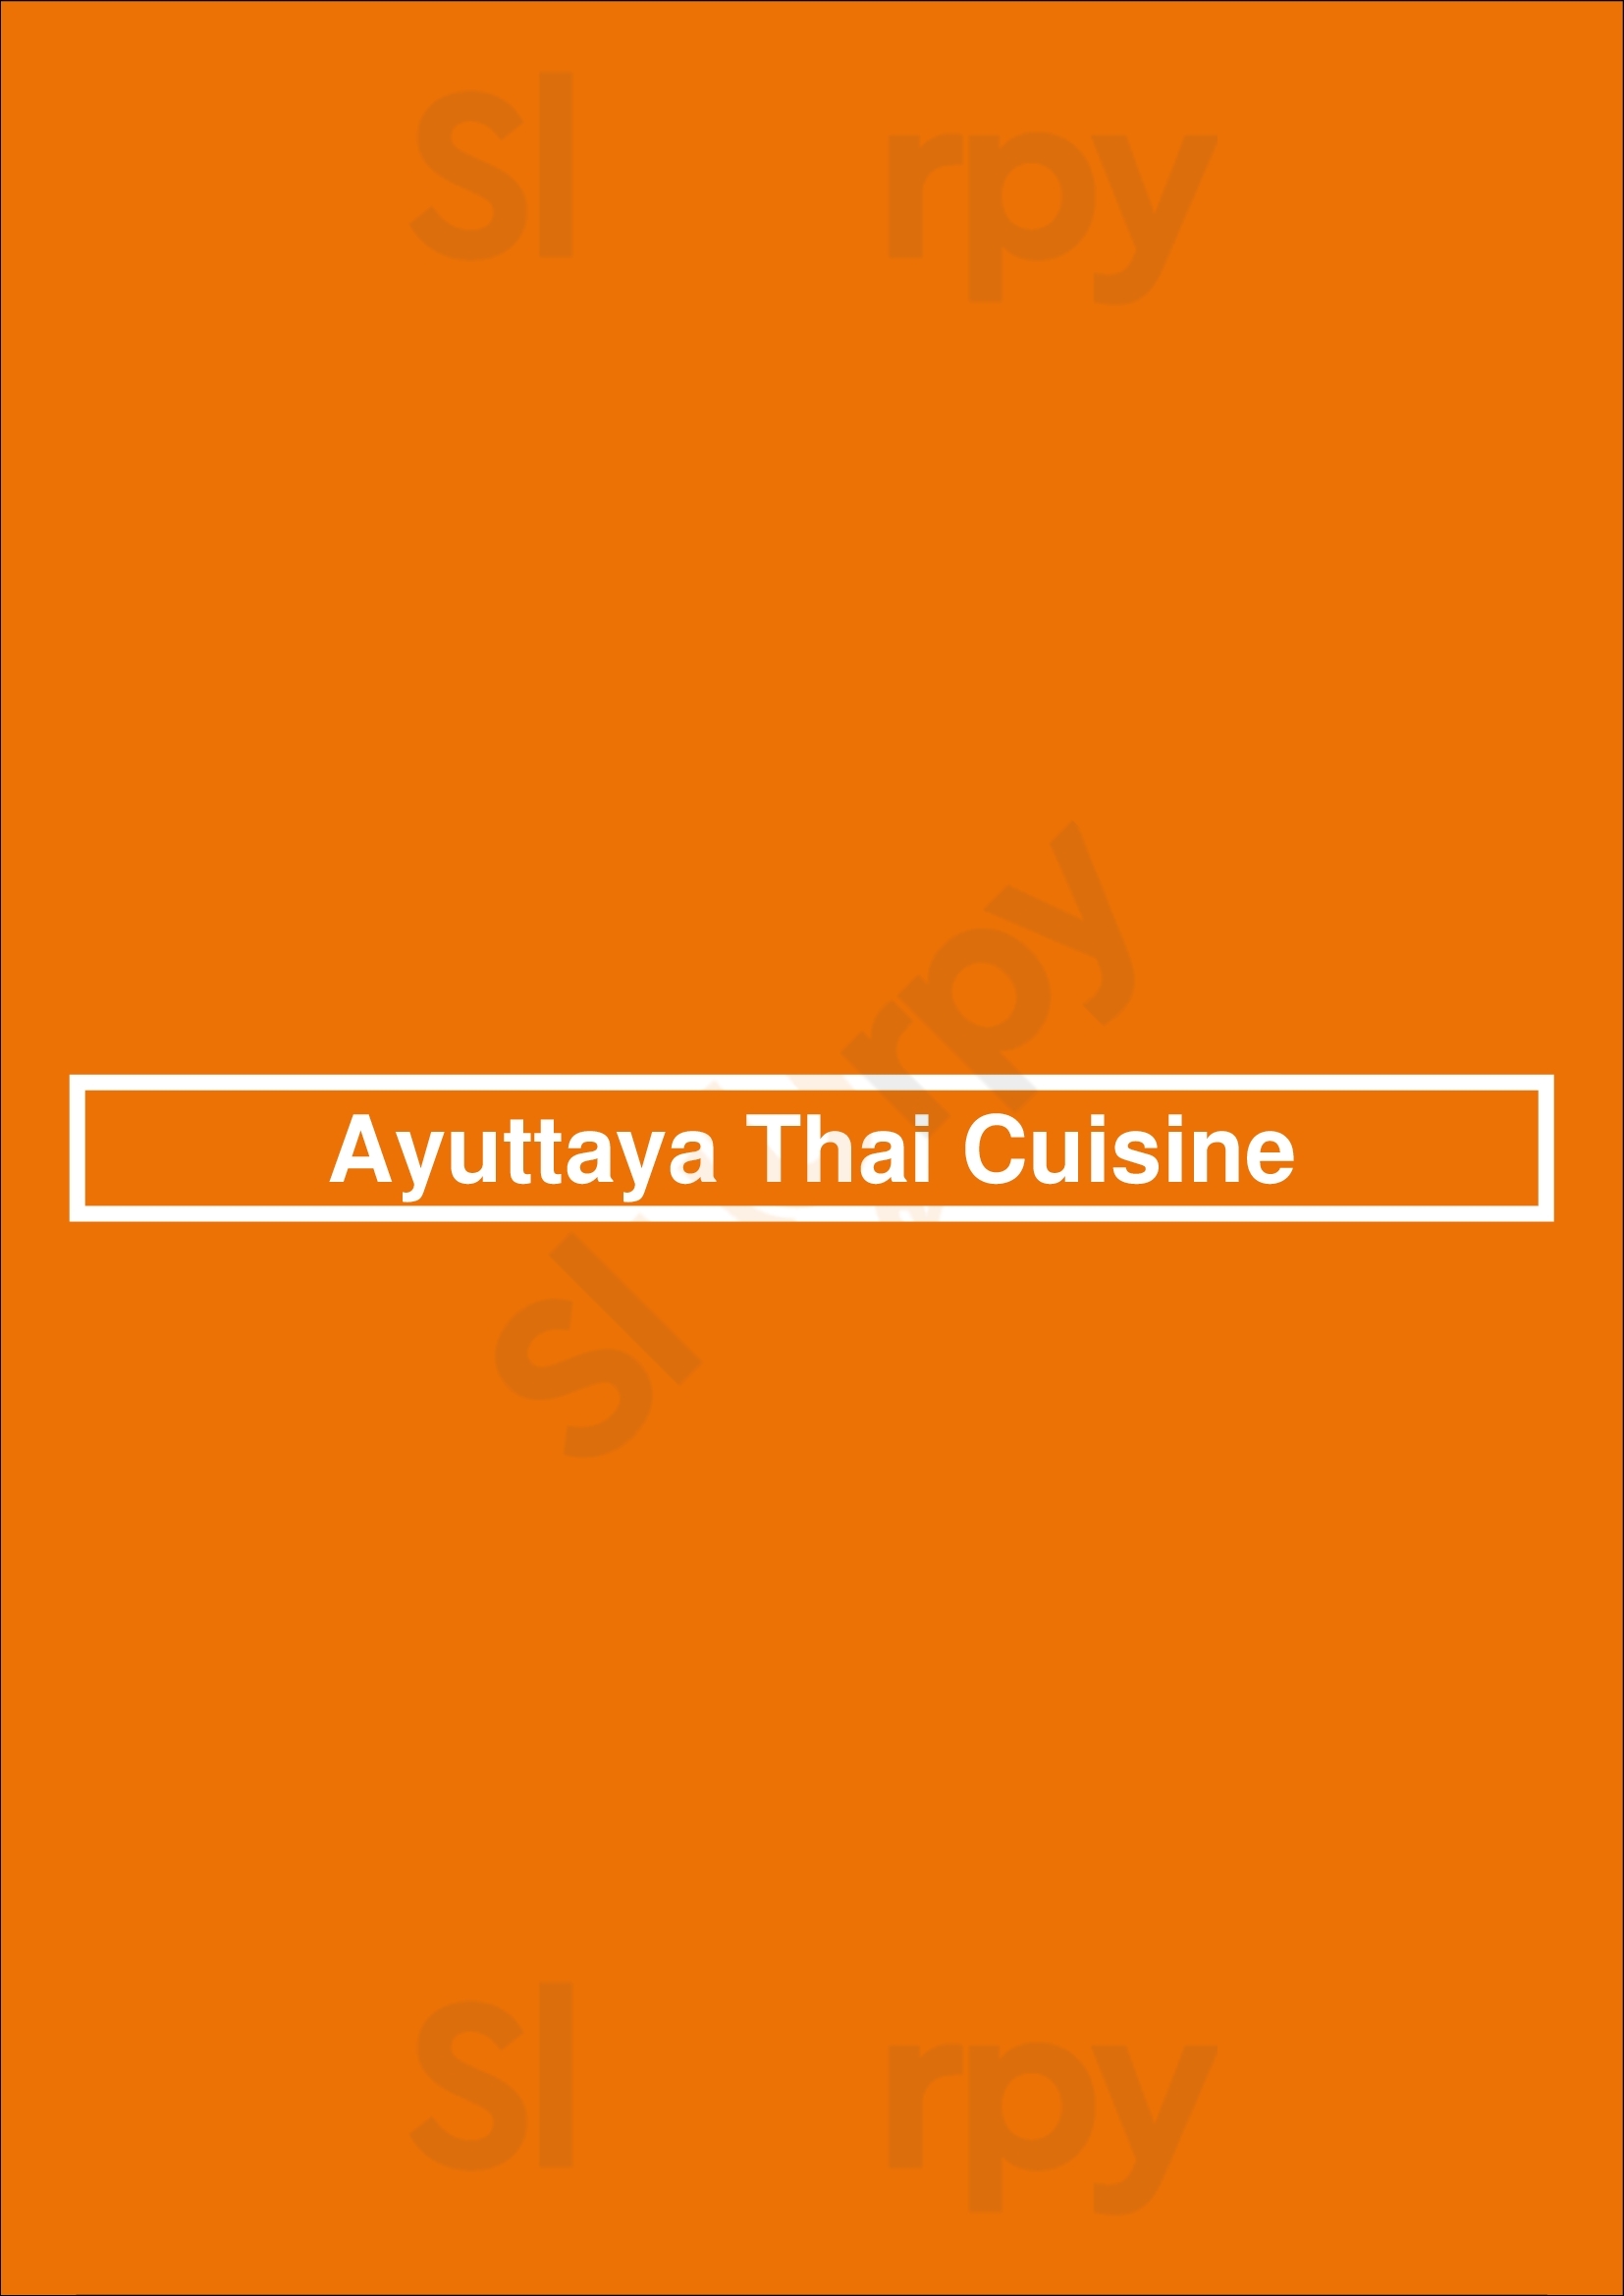 Ayuttaya Thai Cuisine Ocala Menu - 1